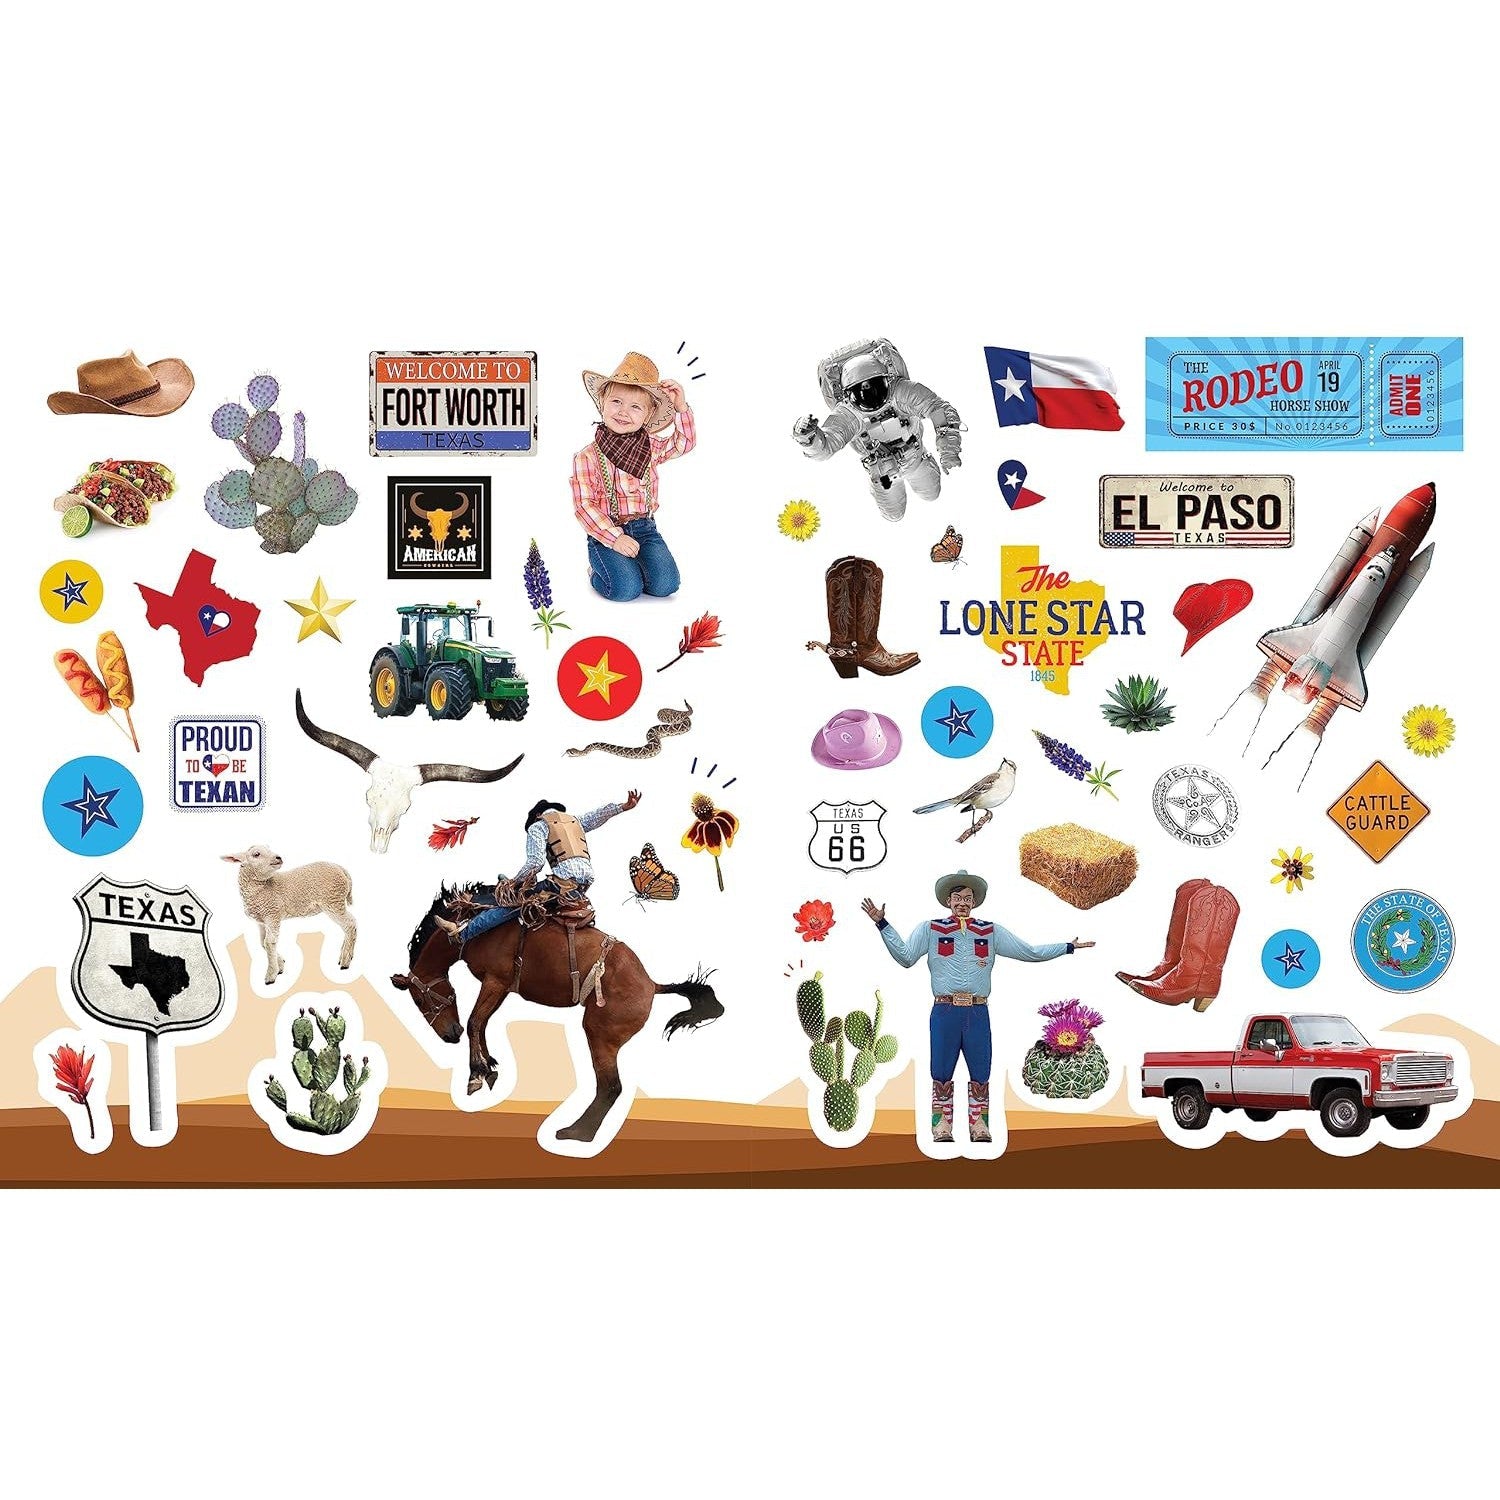 Sourcebooks: 500 Stickers: Texas-SOURCEBOOKS-Little Giant Kidz